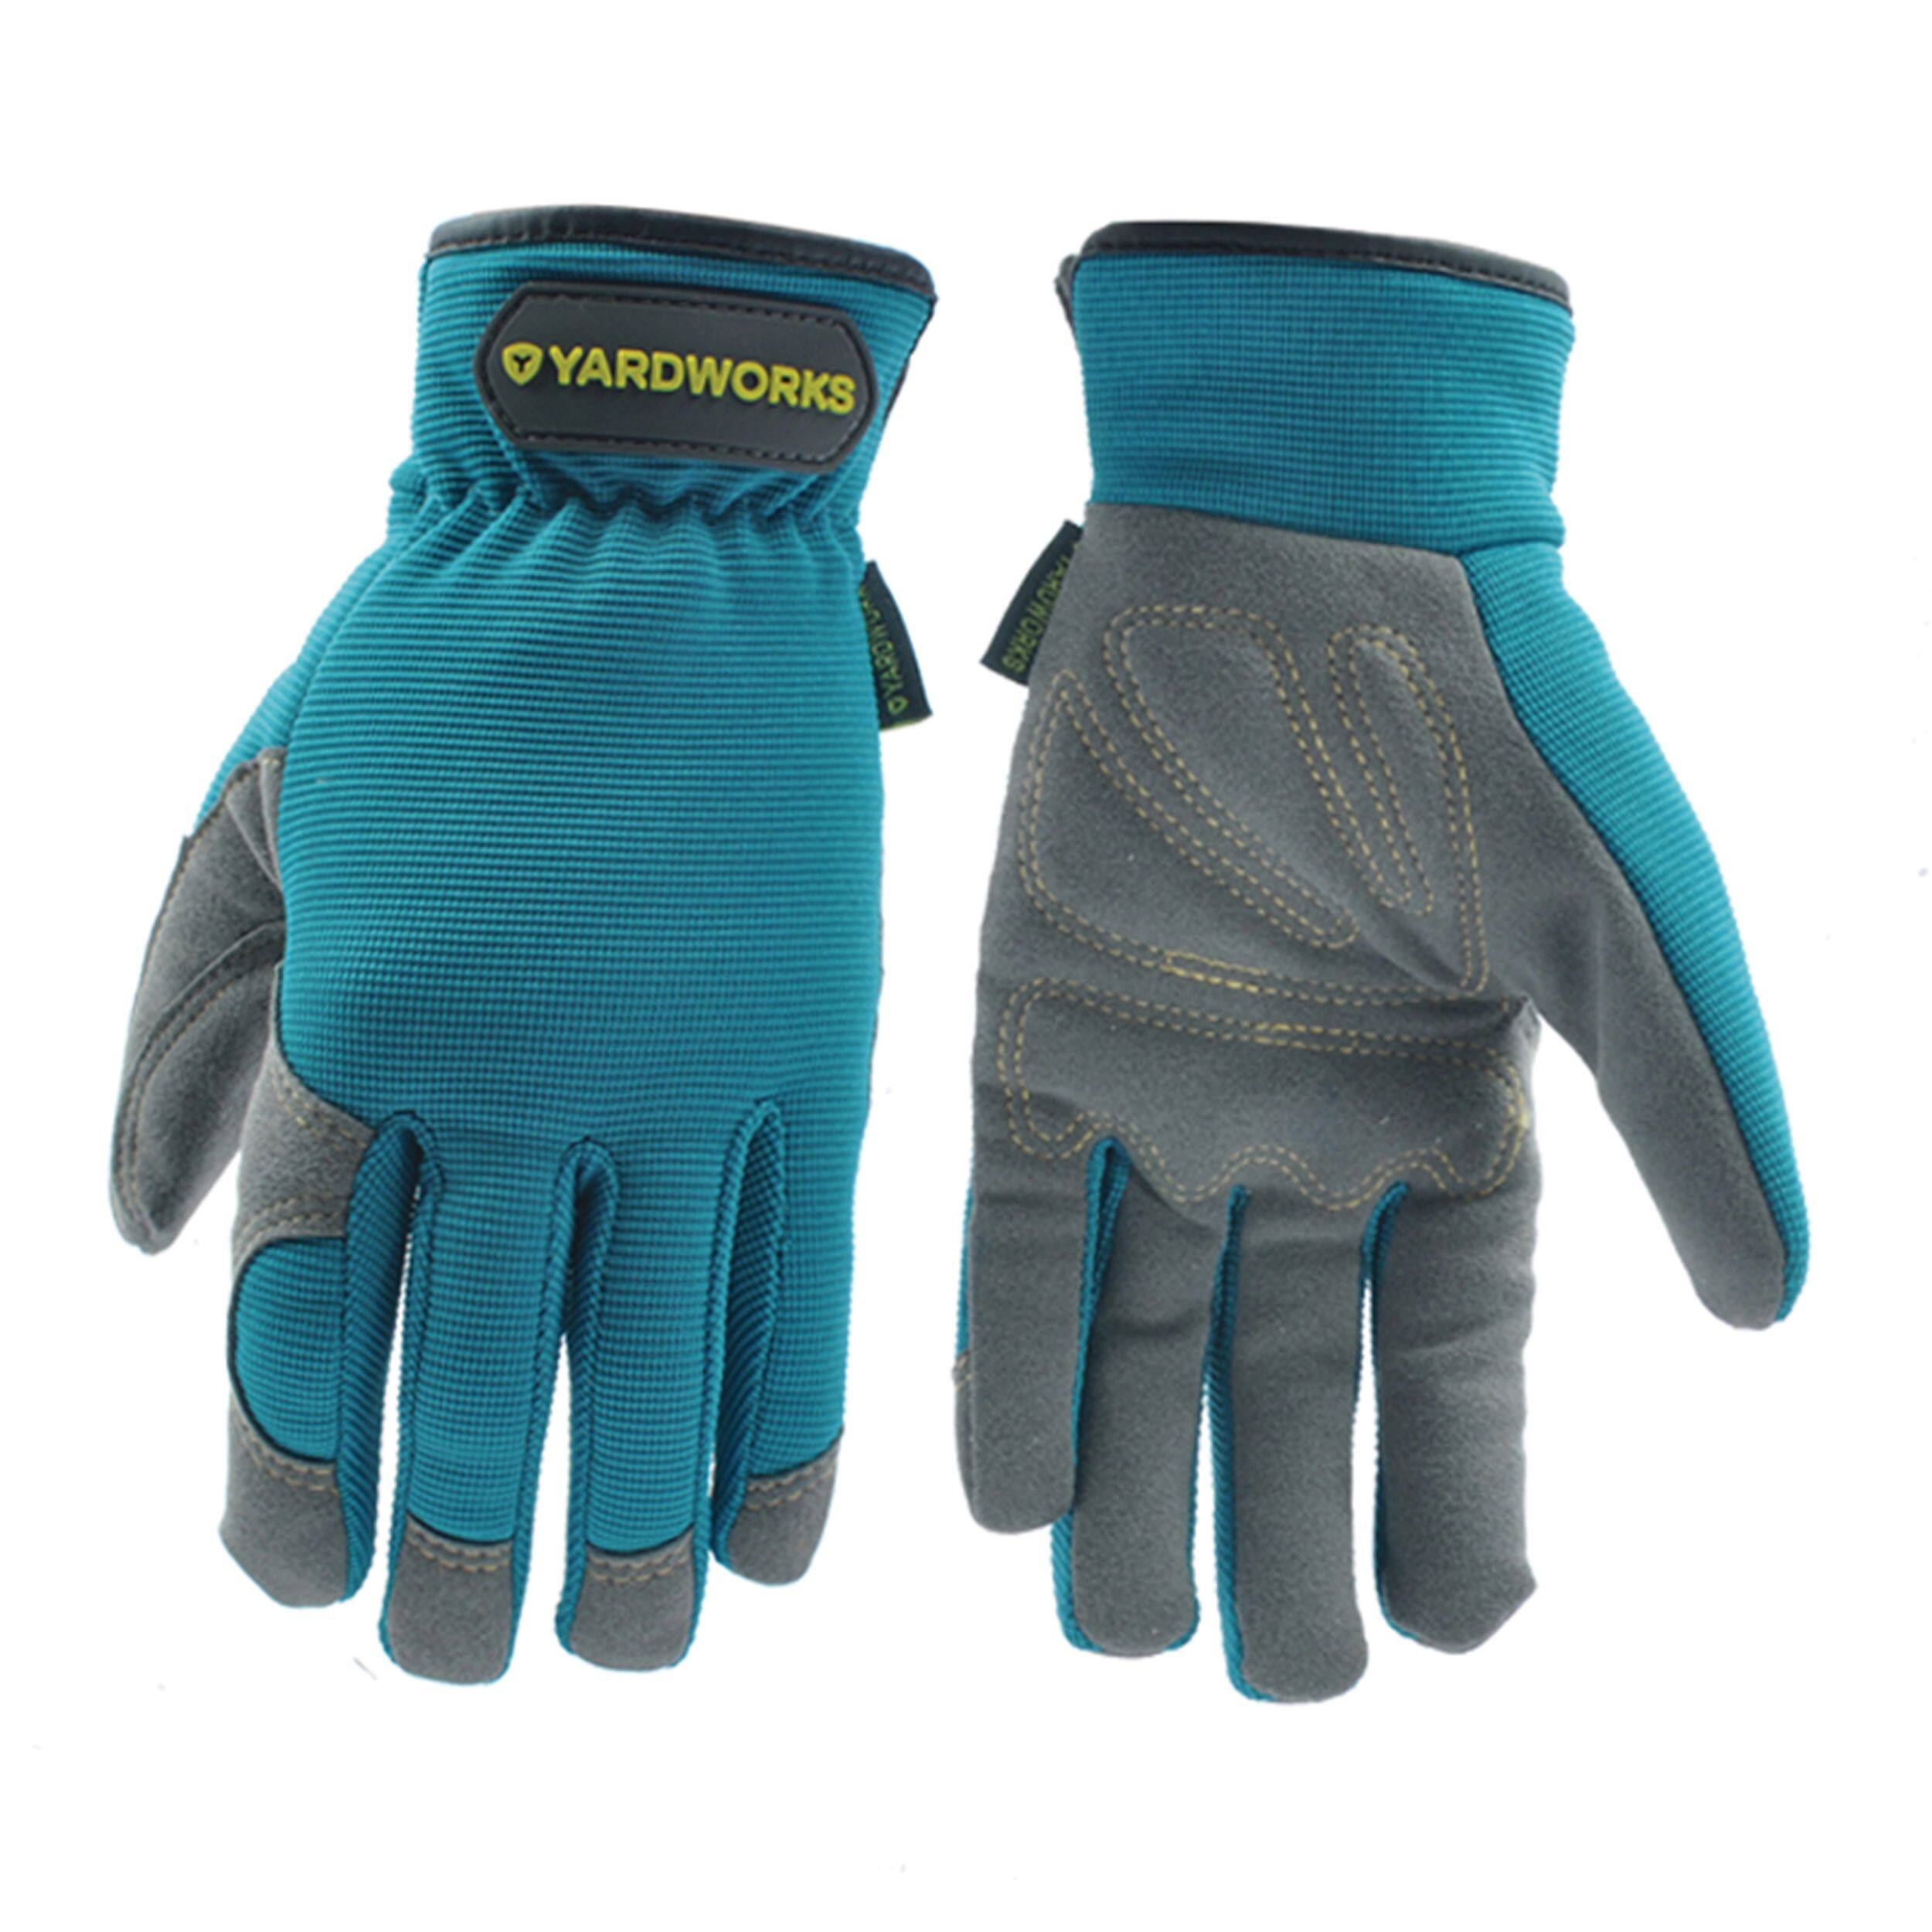 Yardworks Synthetic Leather Unisex Gardening Gloves, Assorted Sizes, Blue